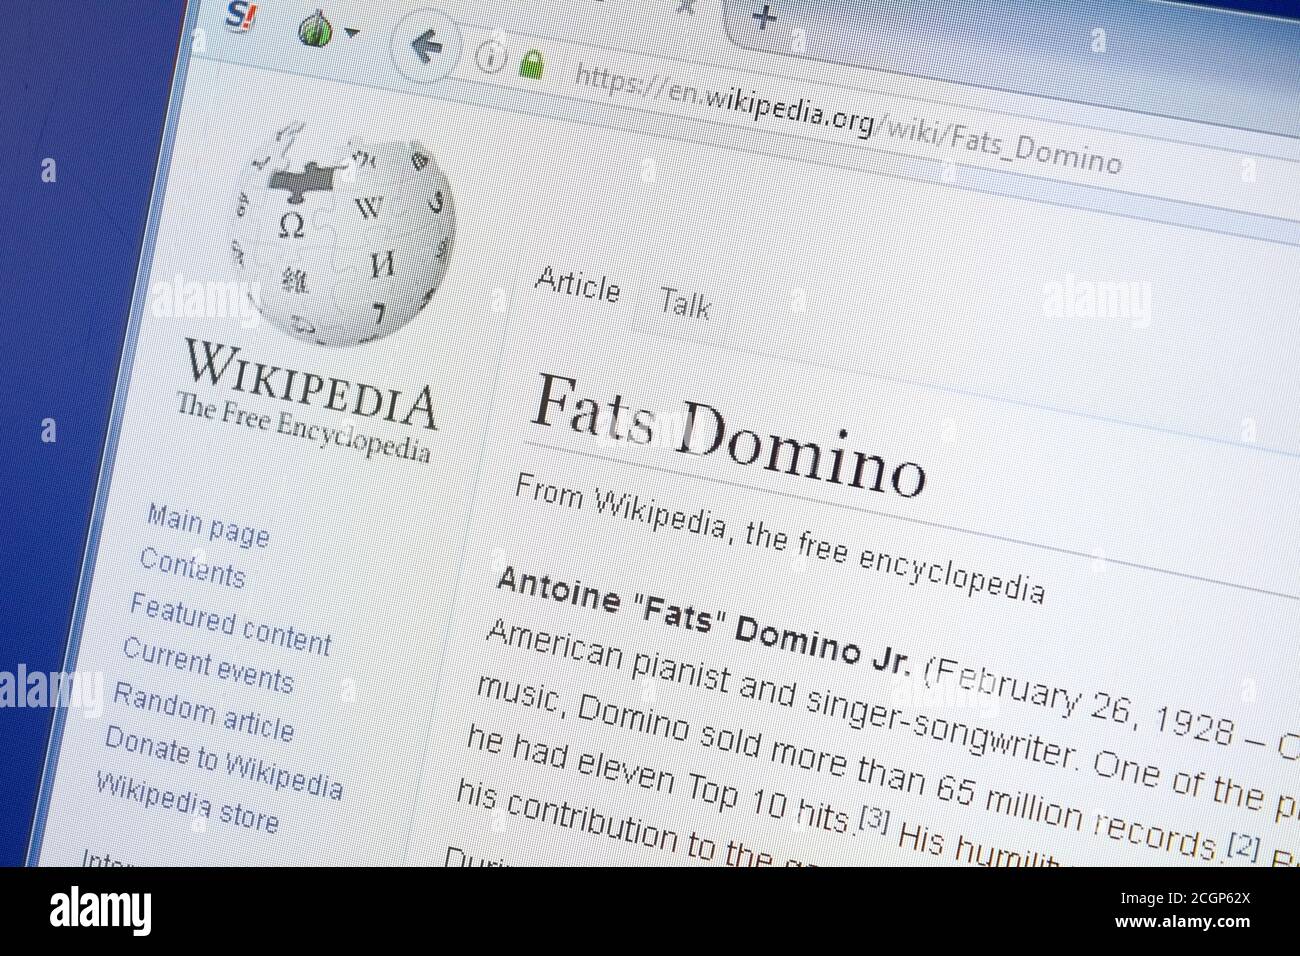 Domino computer - Wikipedia